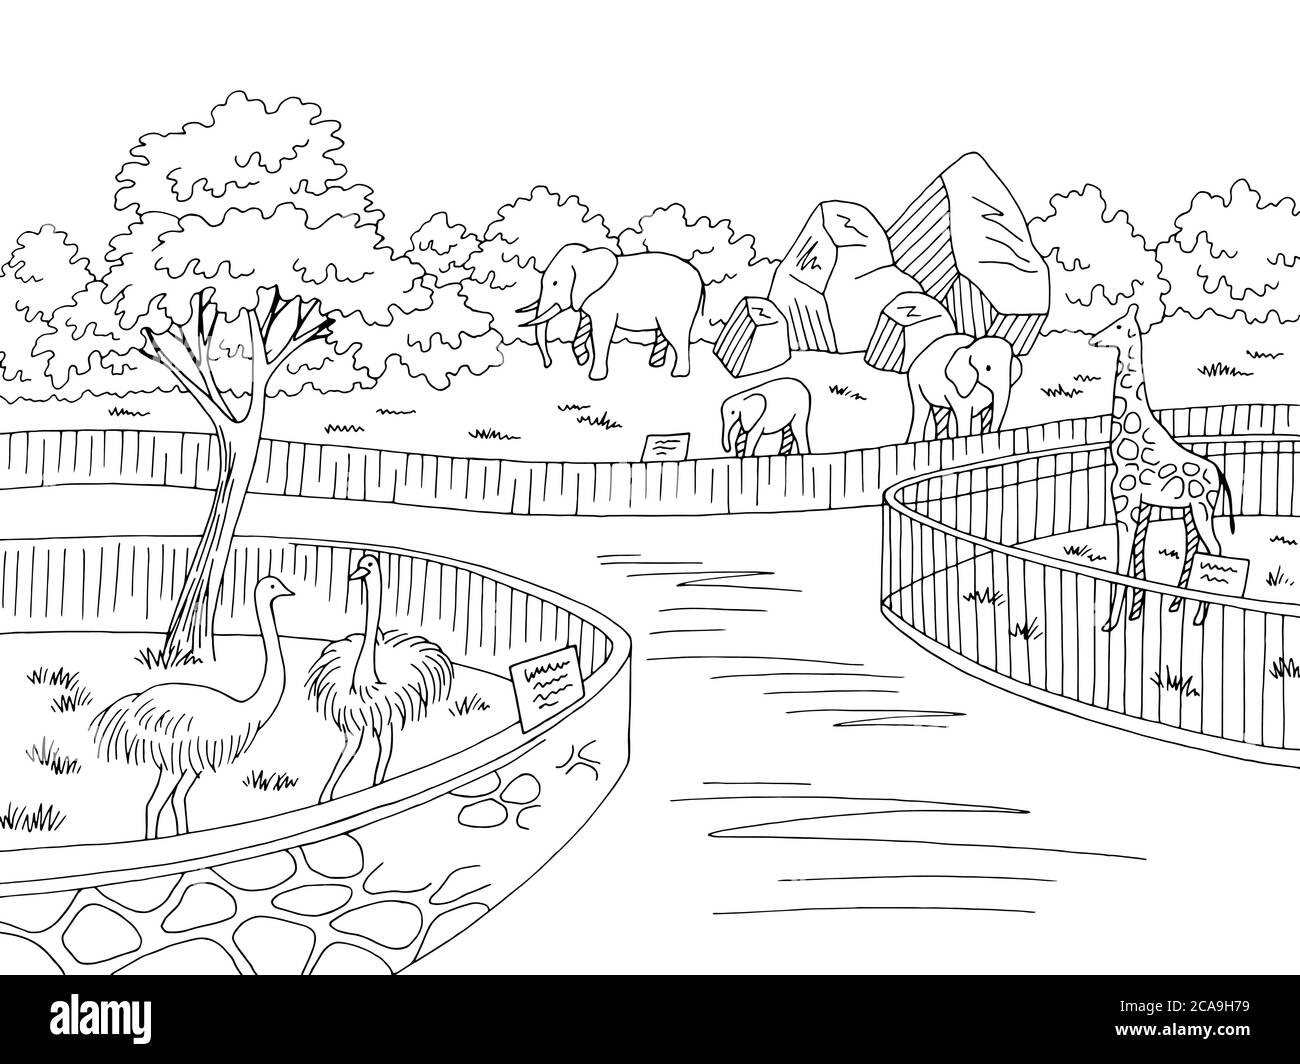 Zoo Park Grafik schwarz weiß Landschaft Skizze Illustration Vektor Stock Vektor